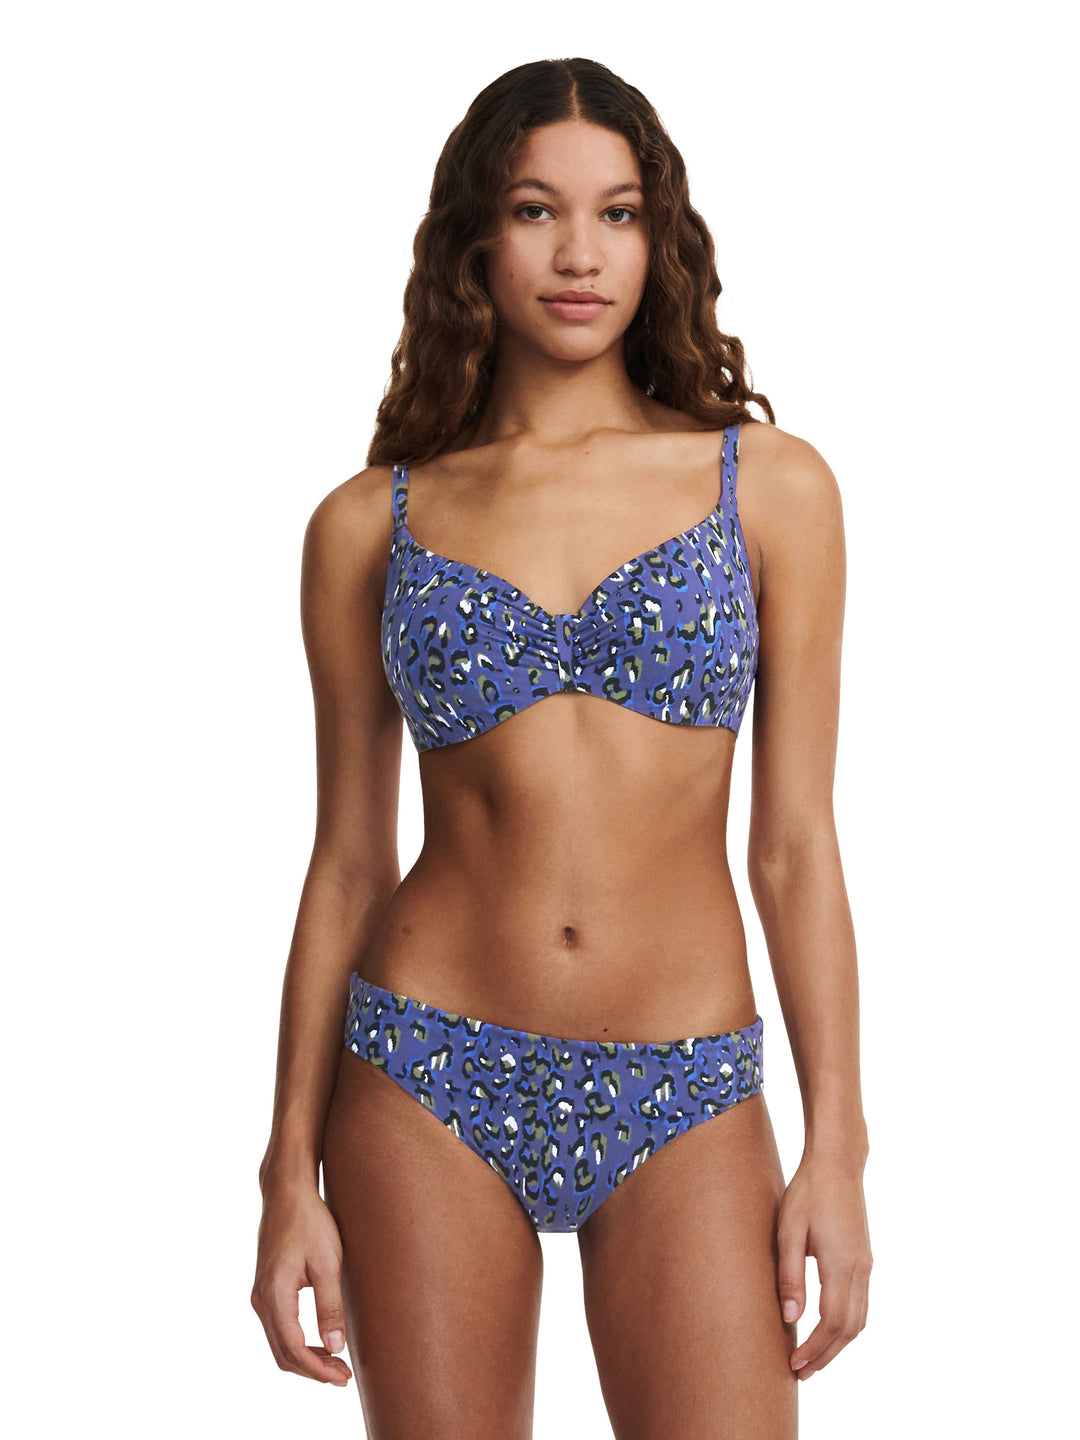 Chantelle Swimwear Eos カバーリングアンダーワイヤーブラ - Blue Leopard Full Cup Bikini Chantelle